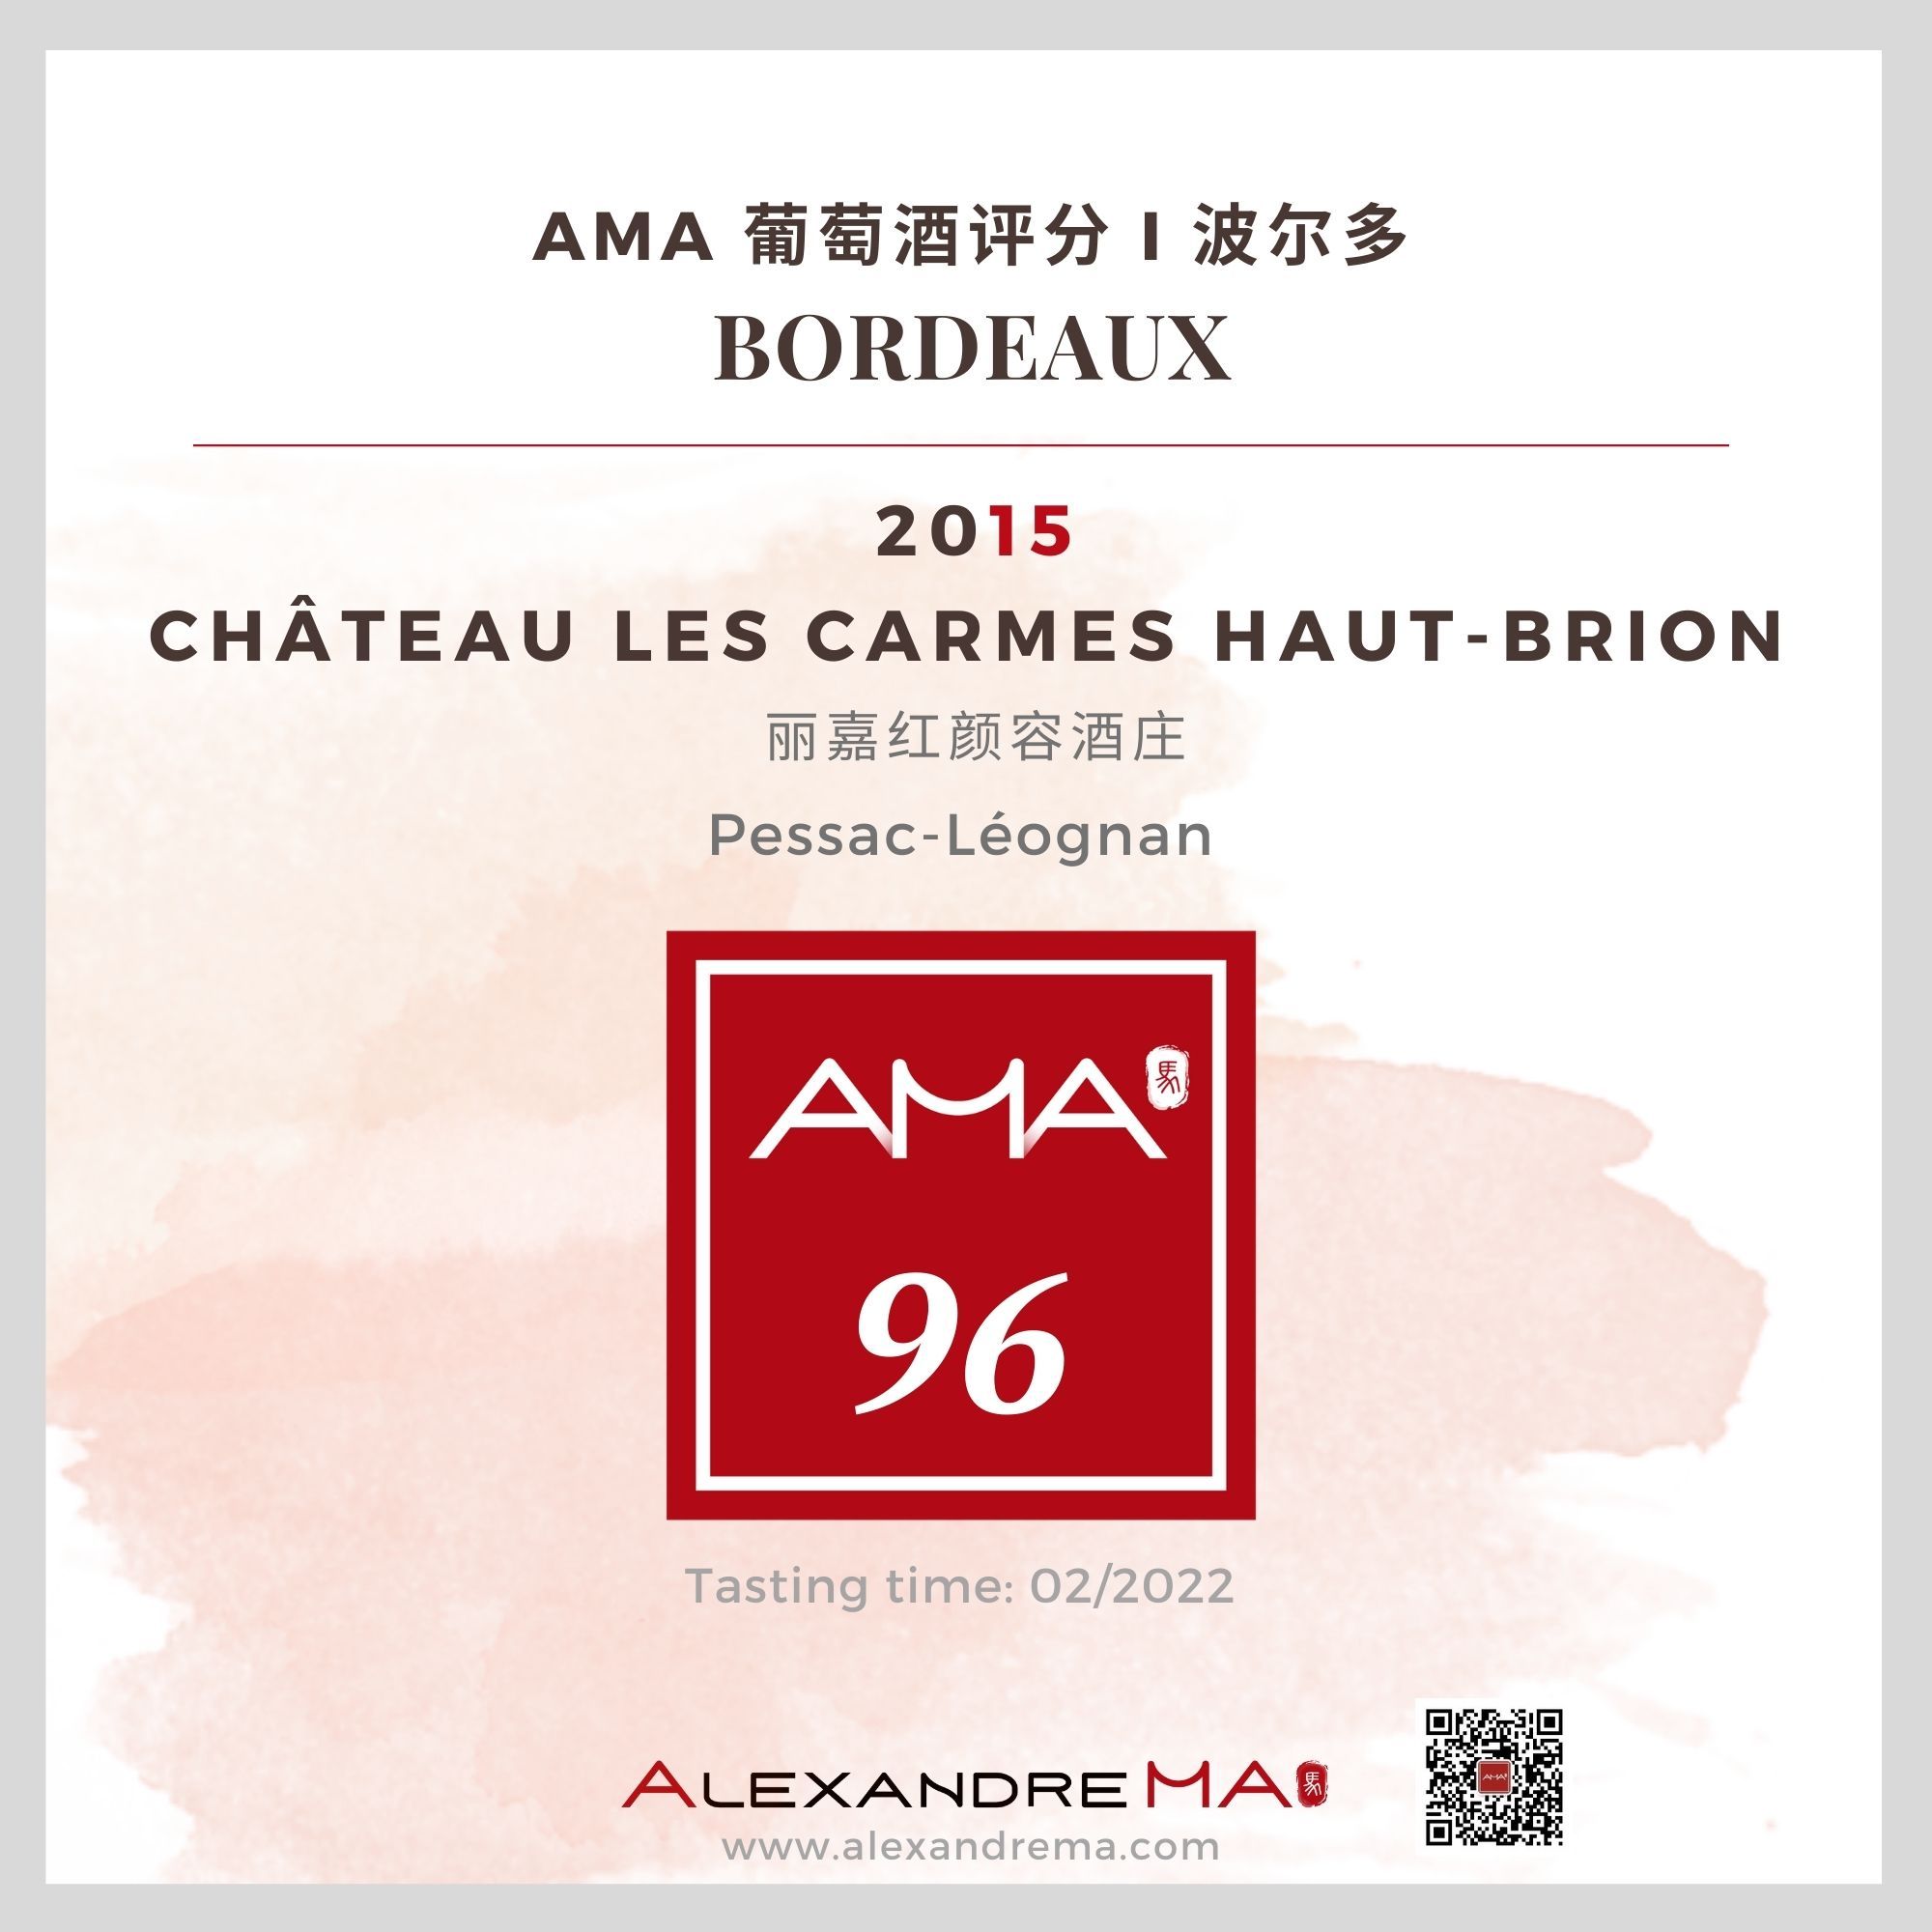 Château Les Carmes Haut-Brion 2015 丽嘉红颜容酒庄 - Alexandre Ma